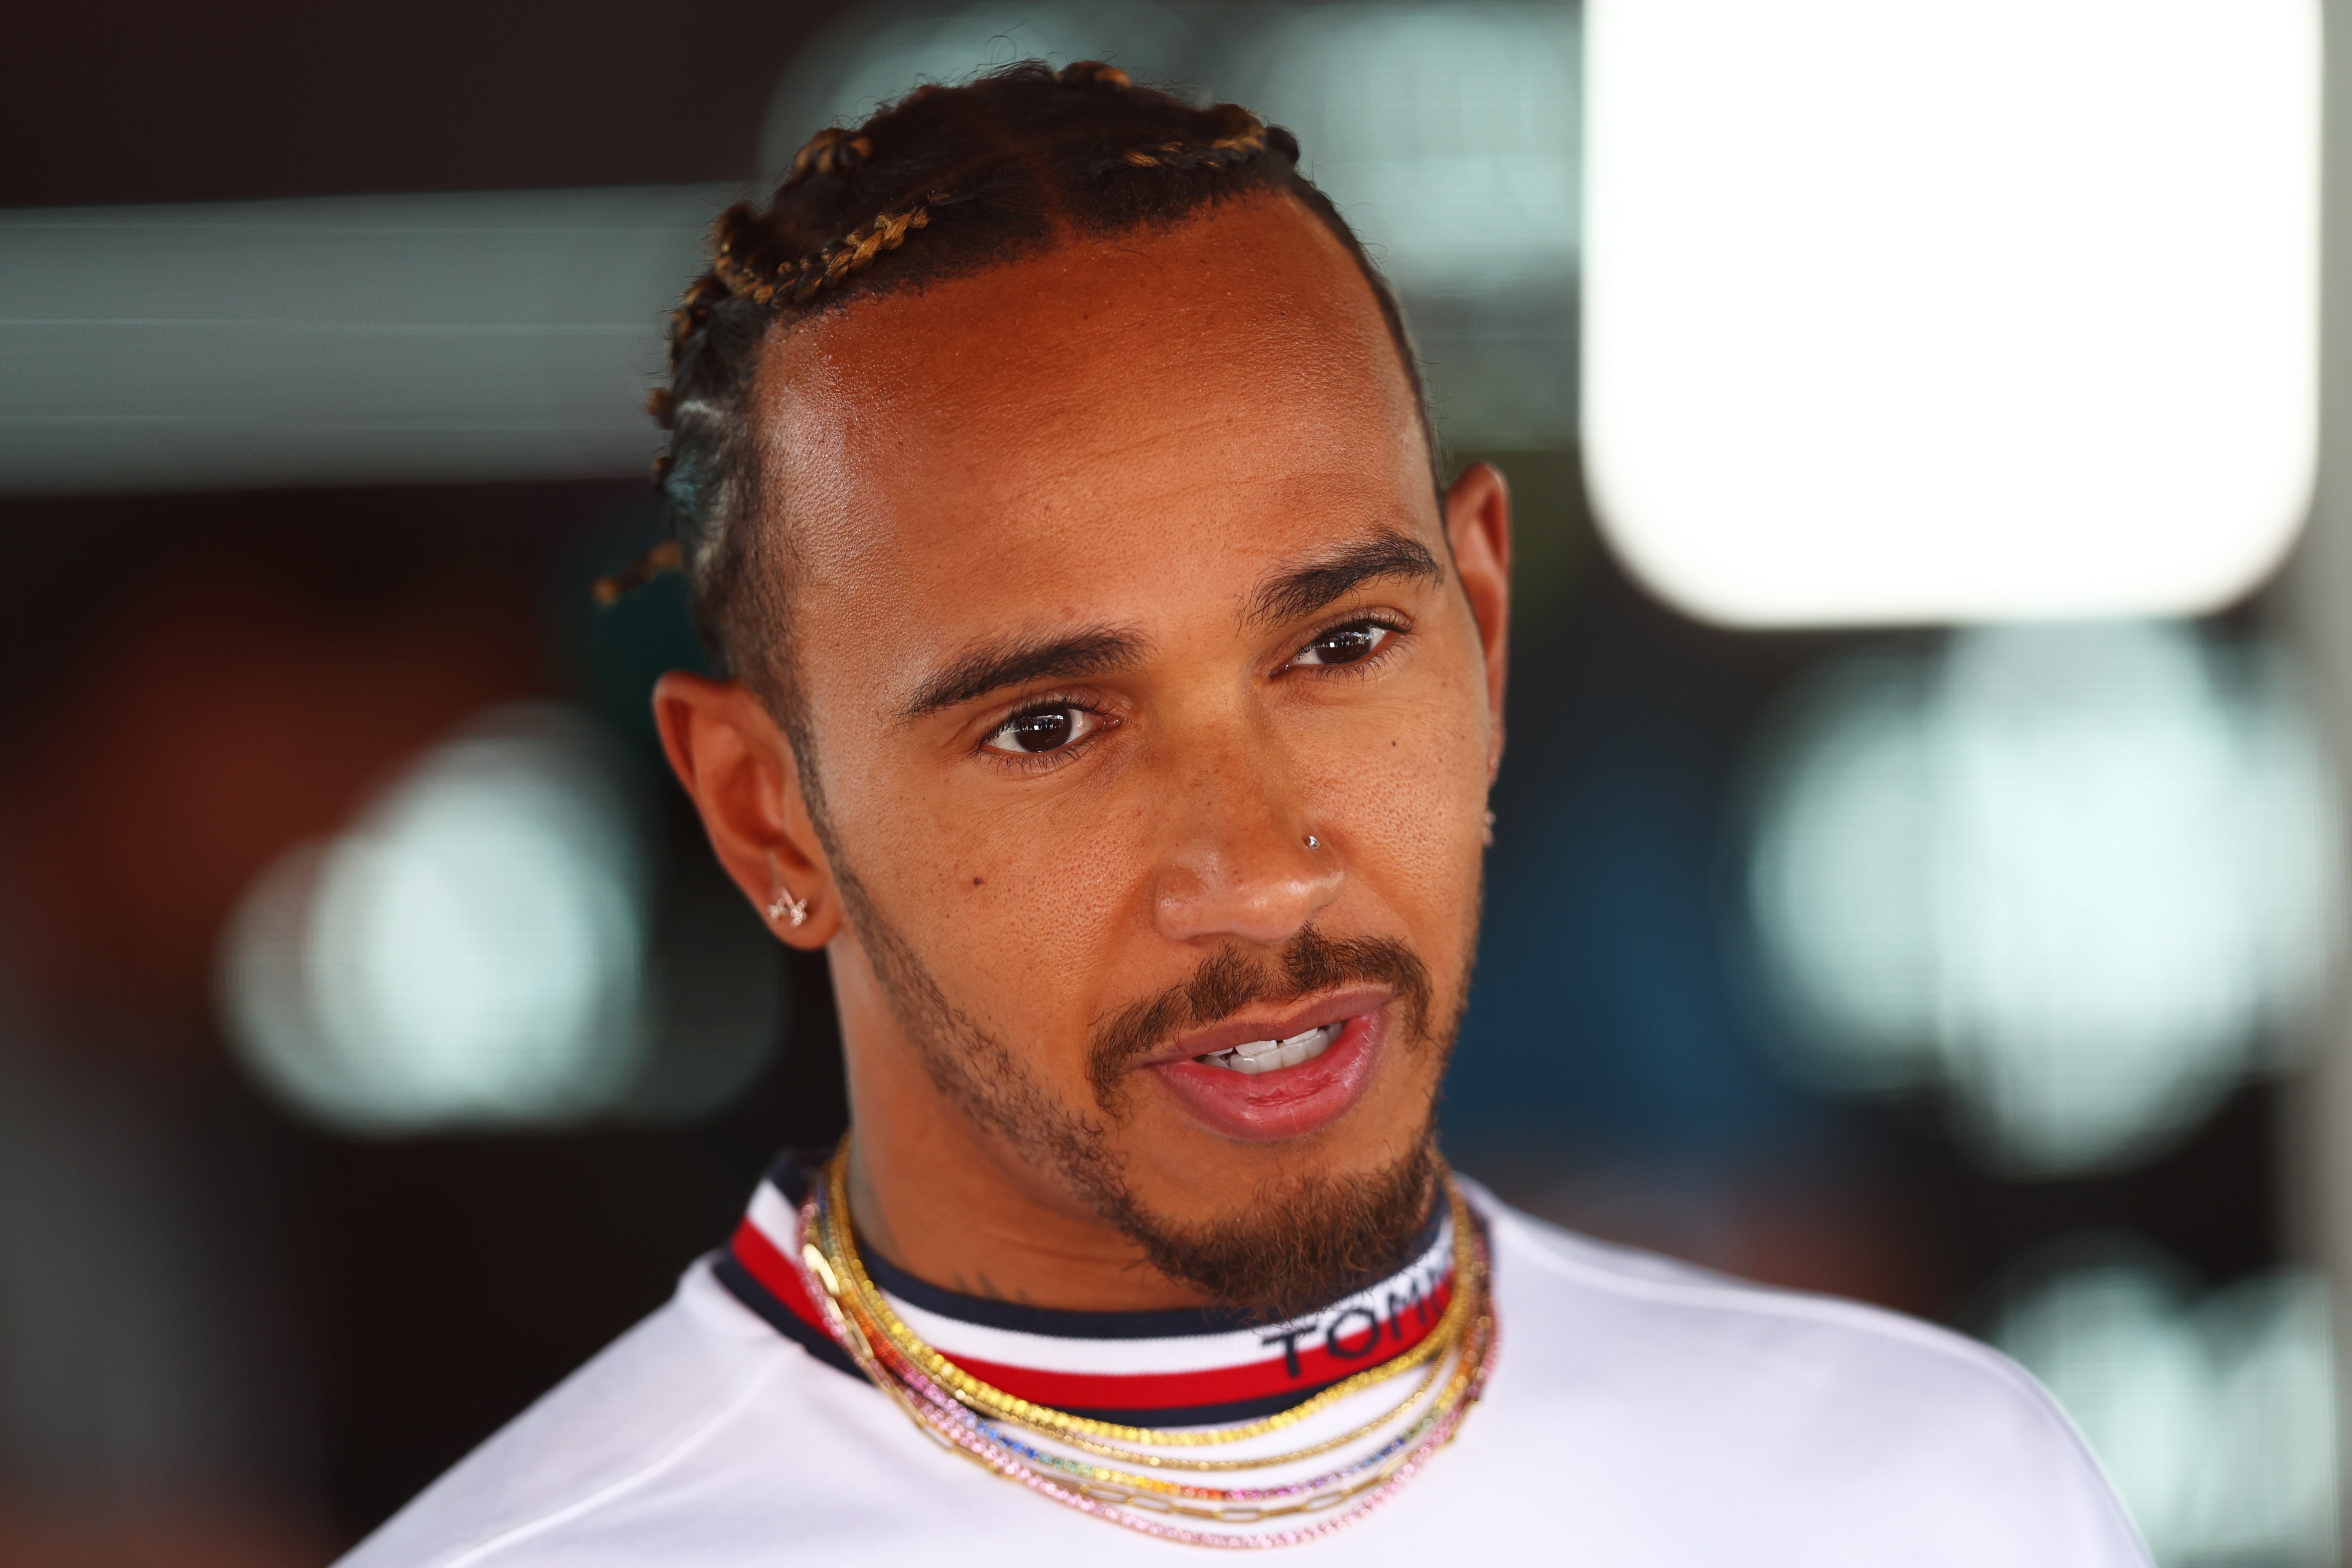 Lewis Hamilton has been struggling in a toiling Mercedes car so far this season.